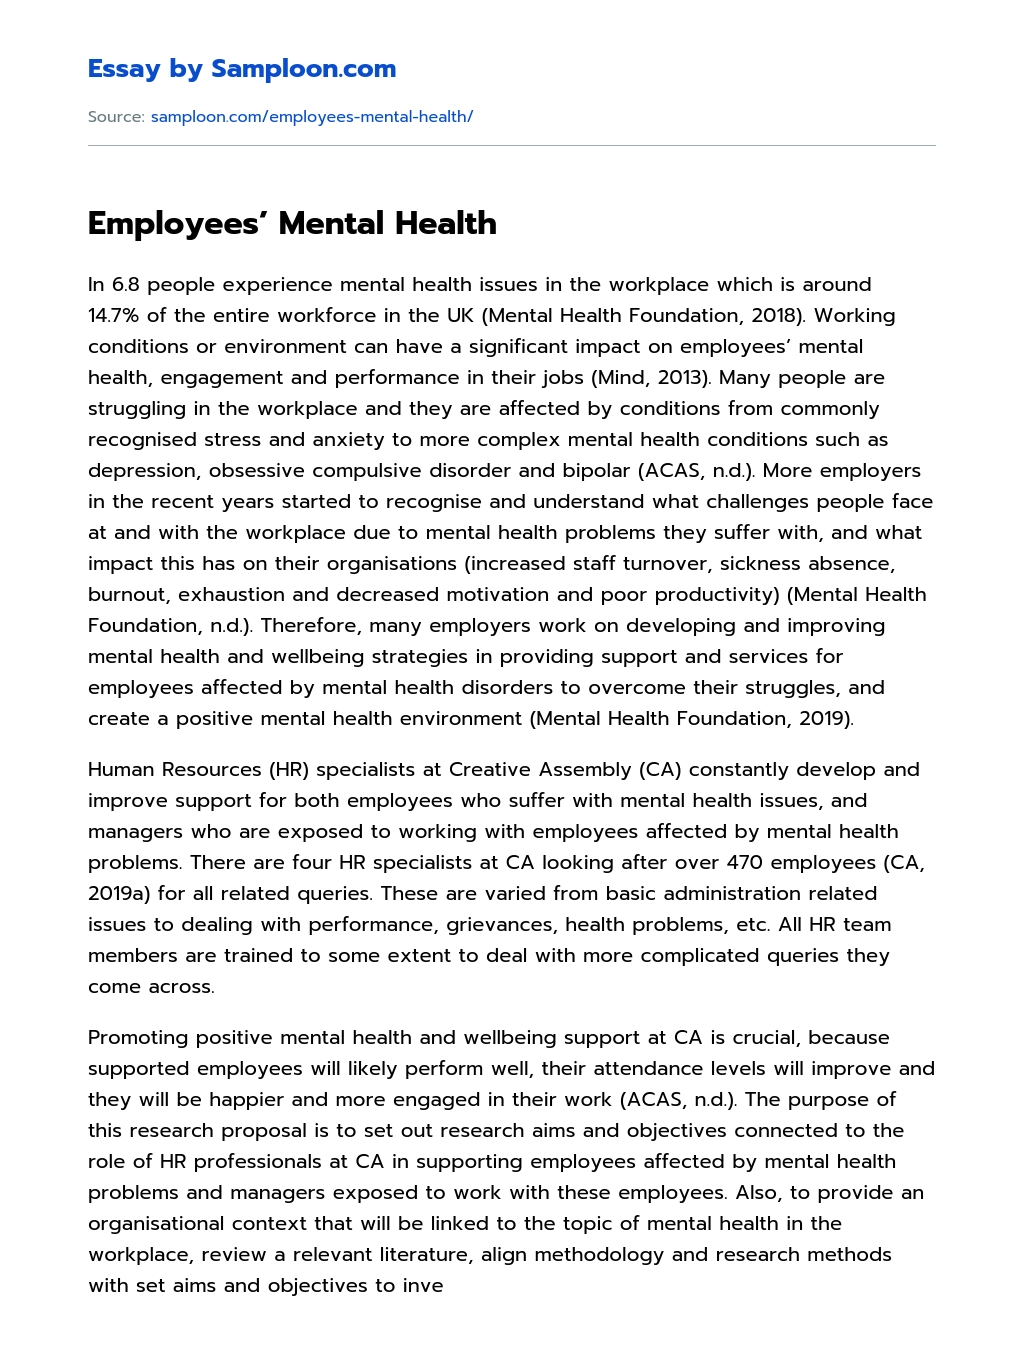 Employees’ Mental Health essay